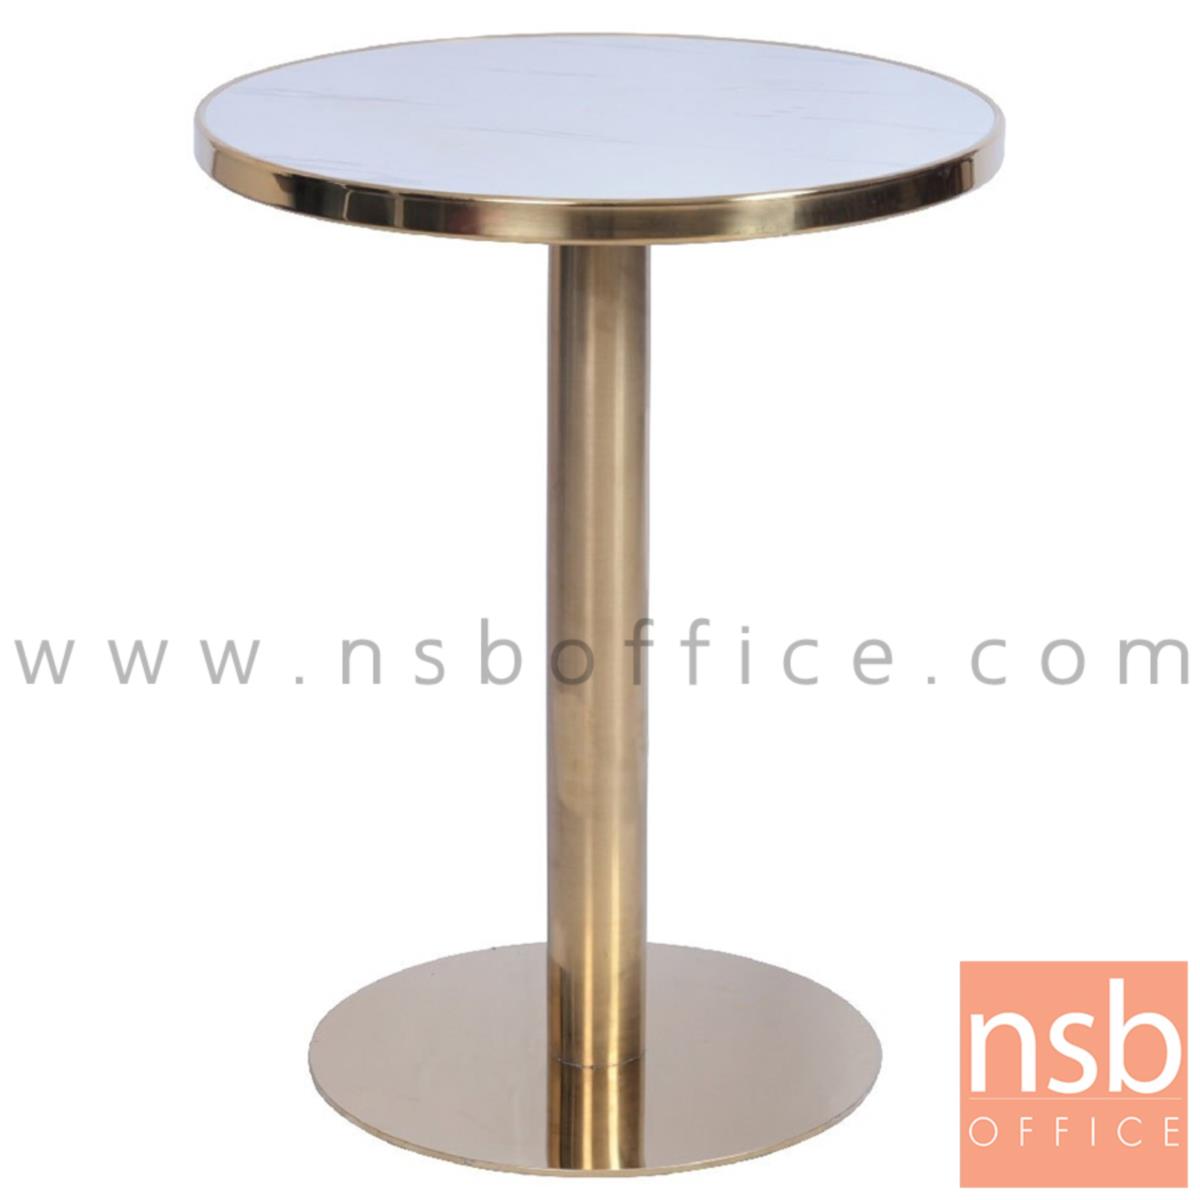 A14A252:โต๊ะบาร์ COFFEE รุ่น Forli (ฟลอริ) ขนาด 59Di cm. หน้าท็อปไม้ลายหินอ่อน ขาเหล็กทอง